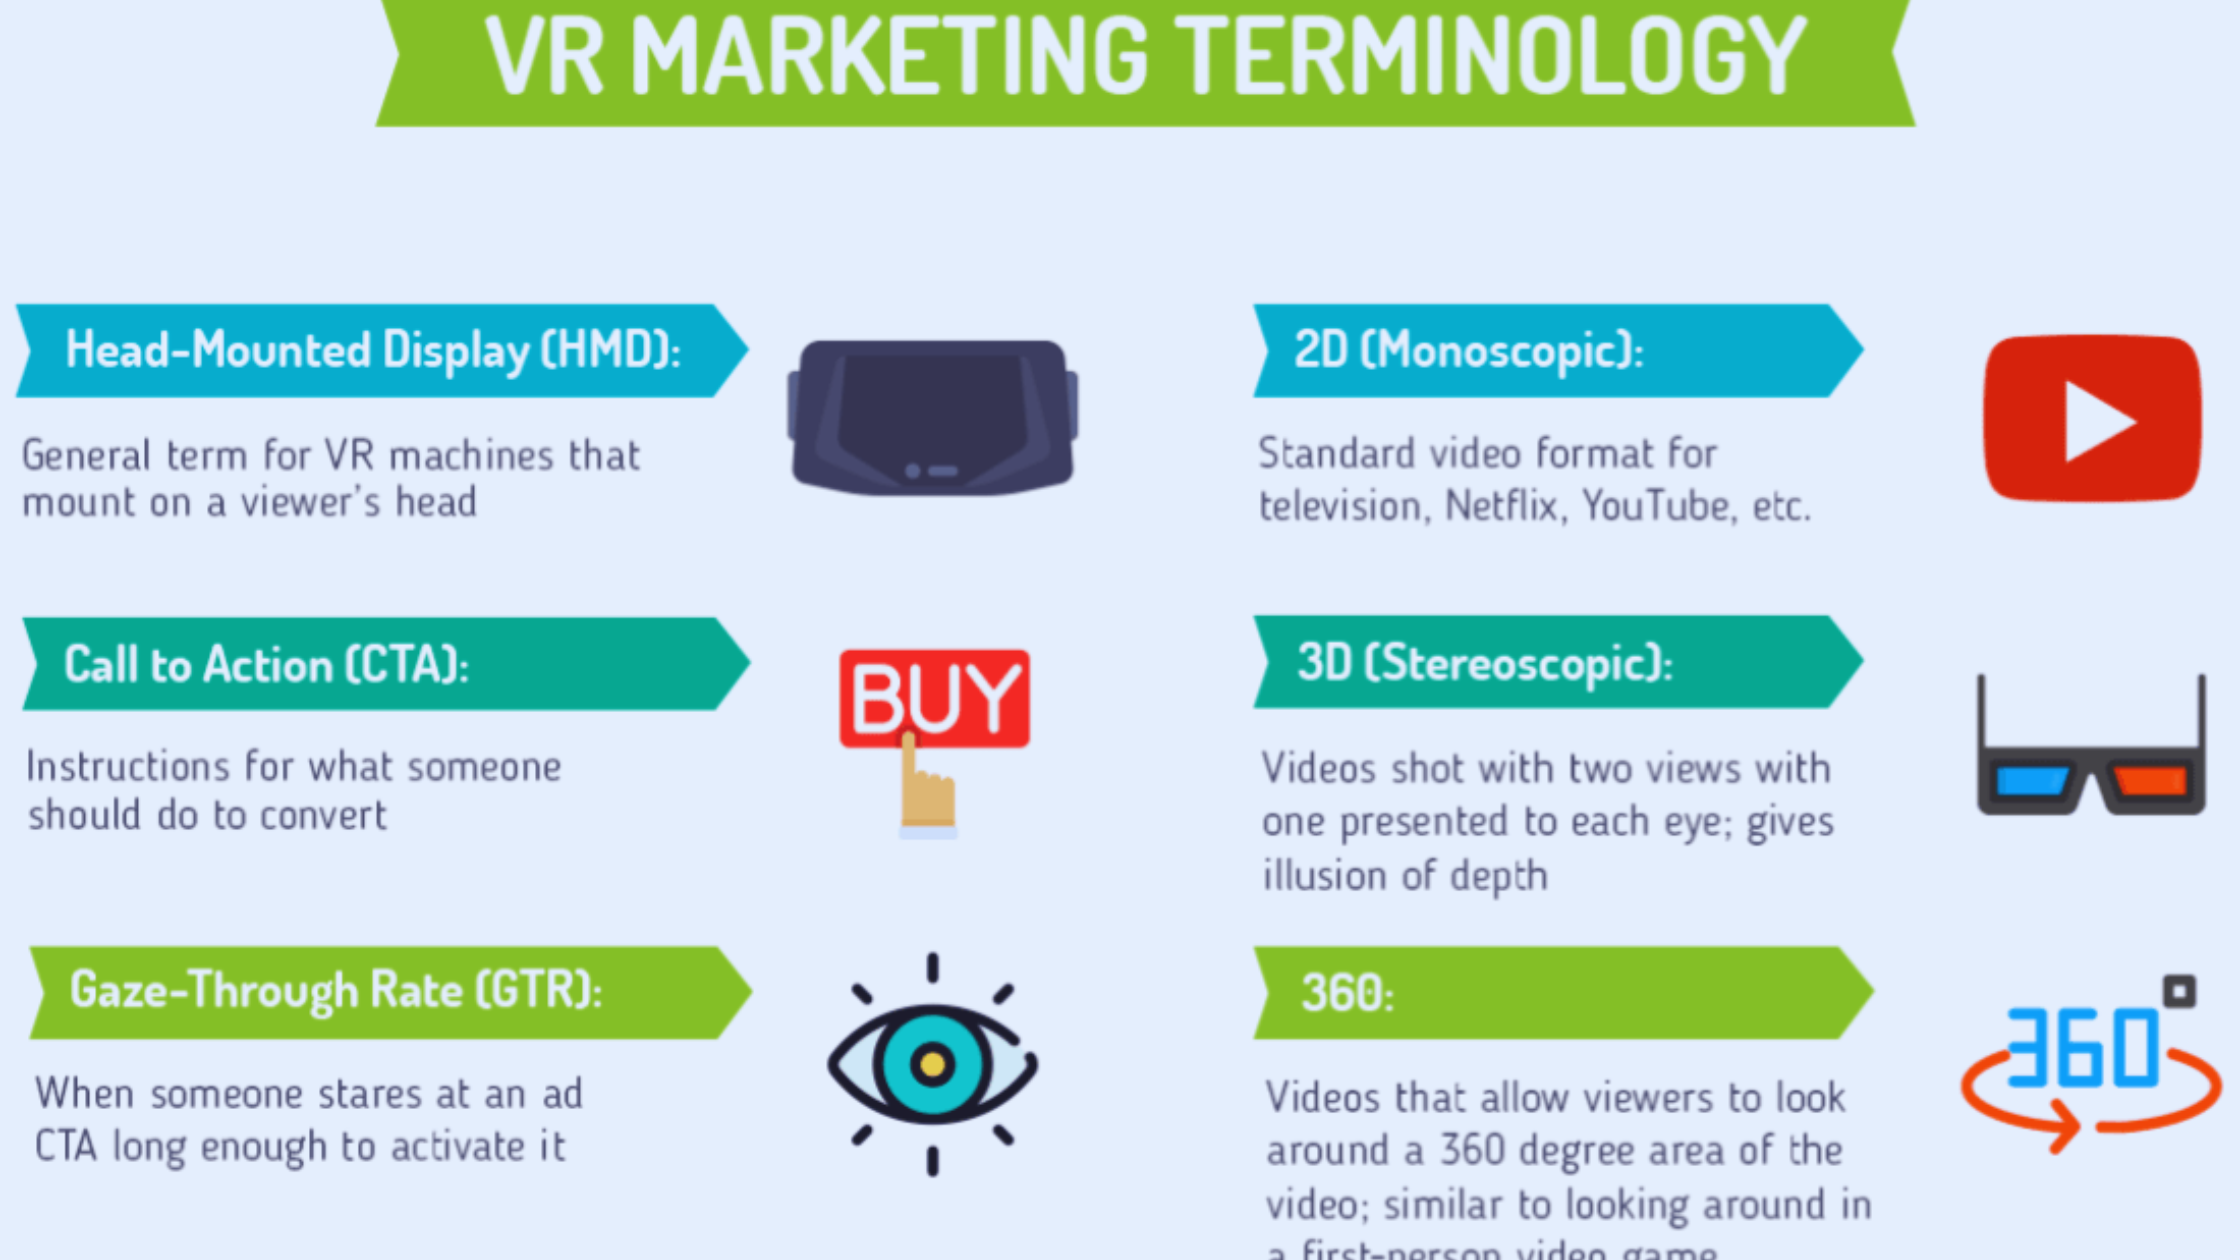 VR Marketing Terminology